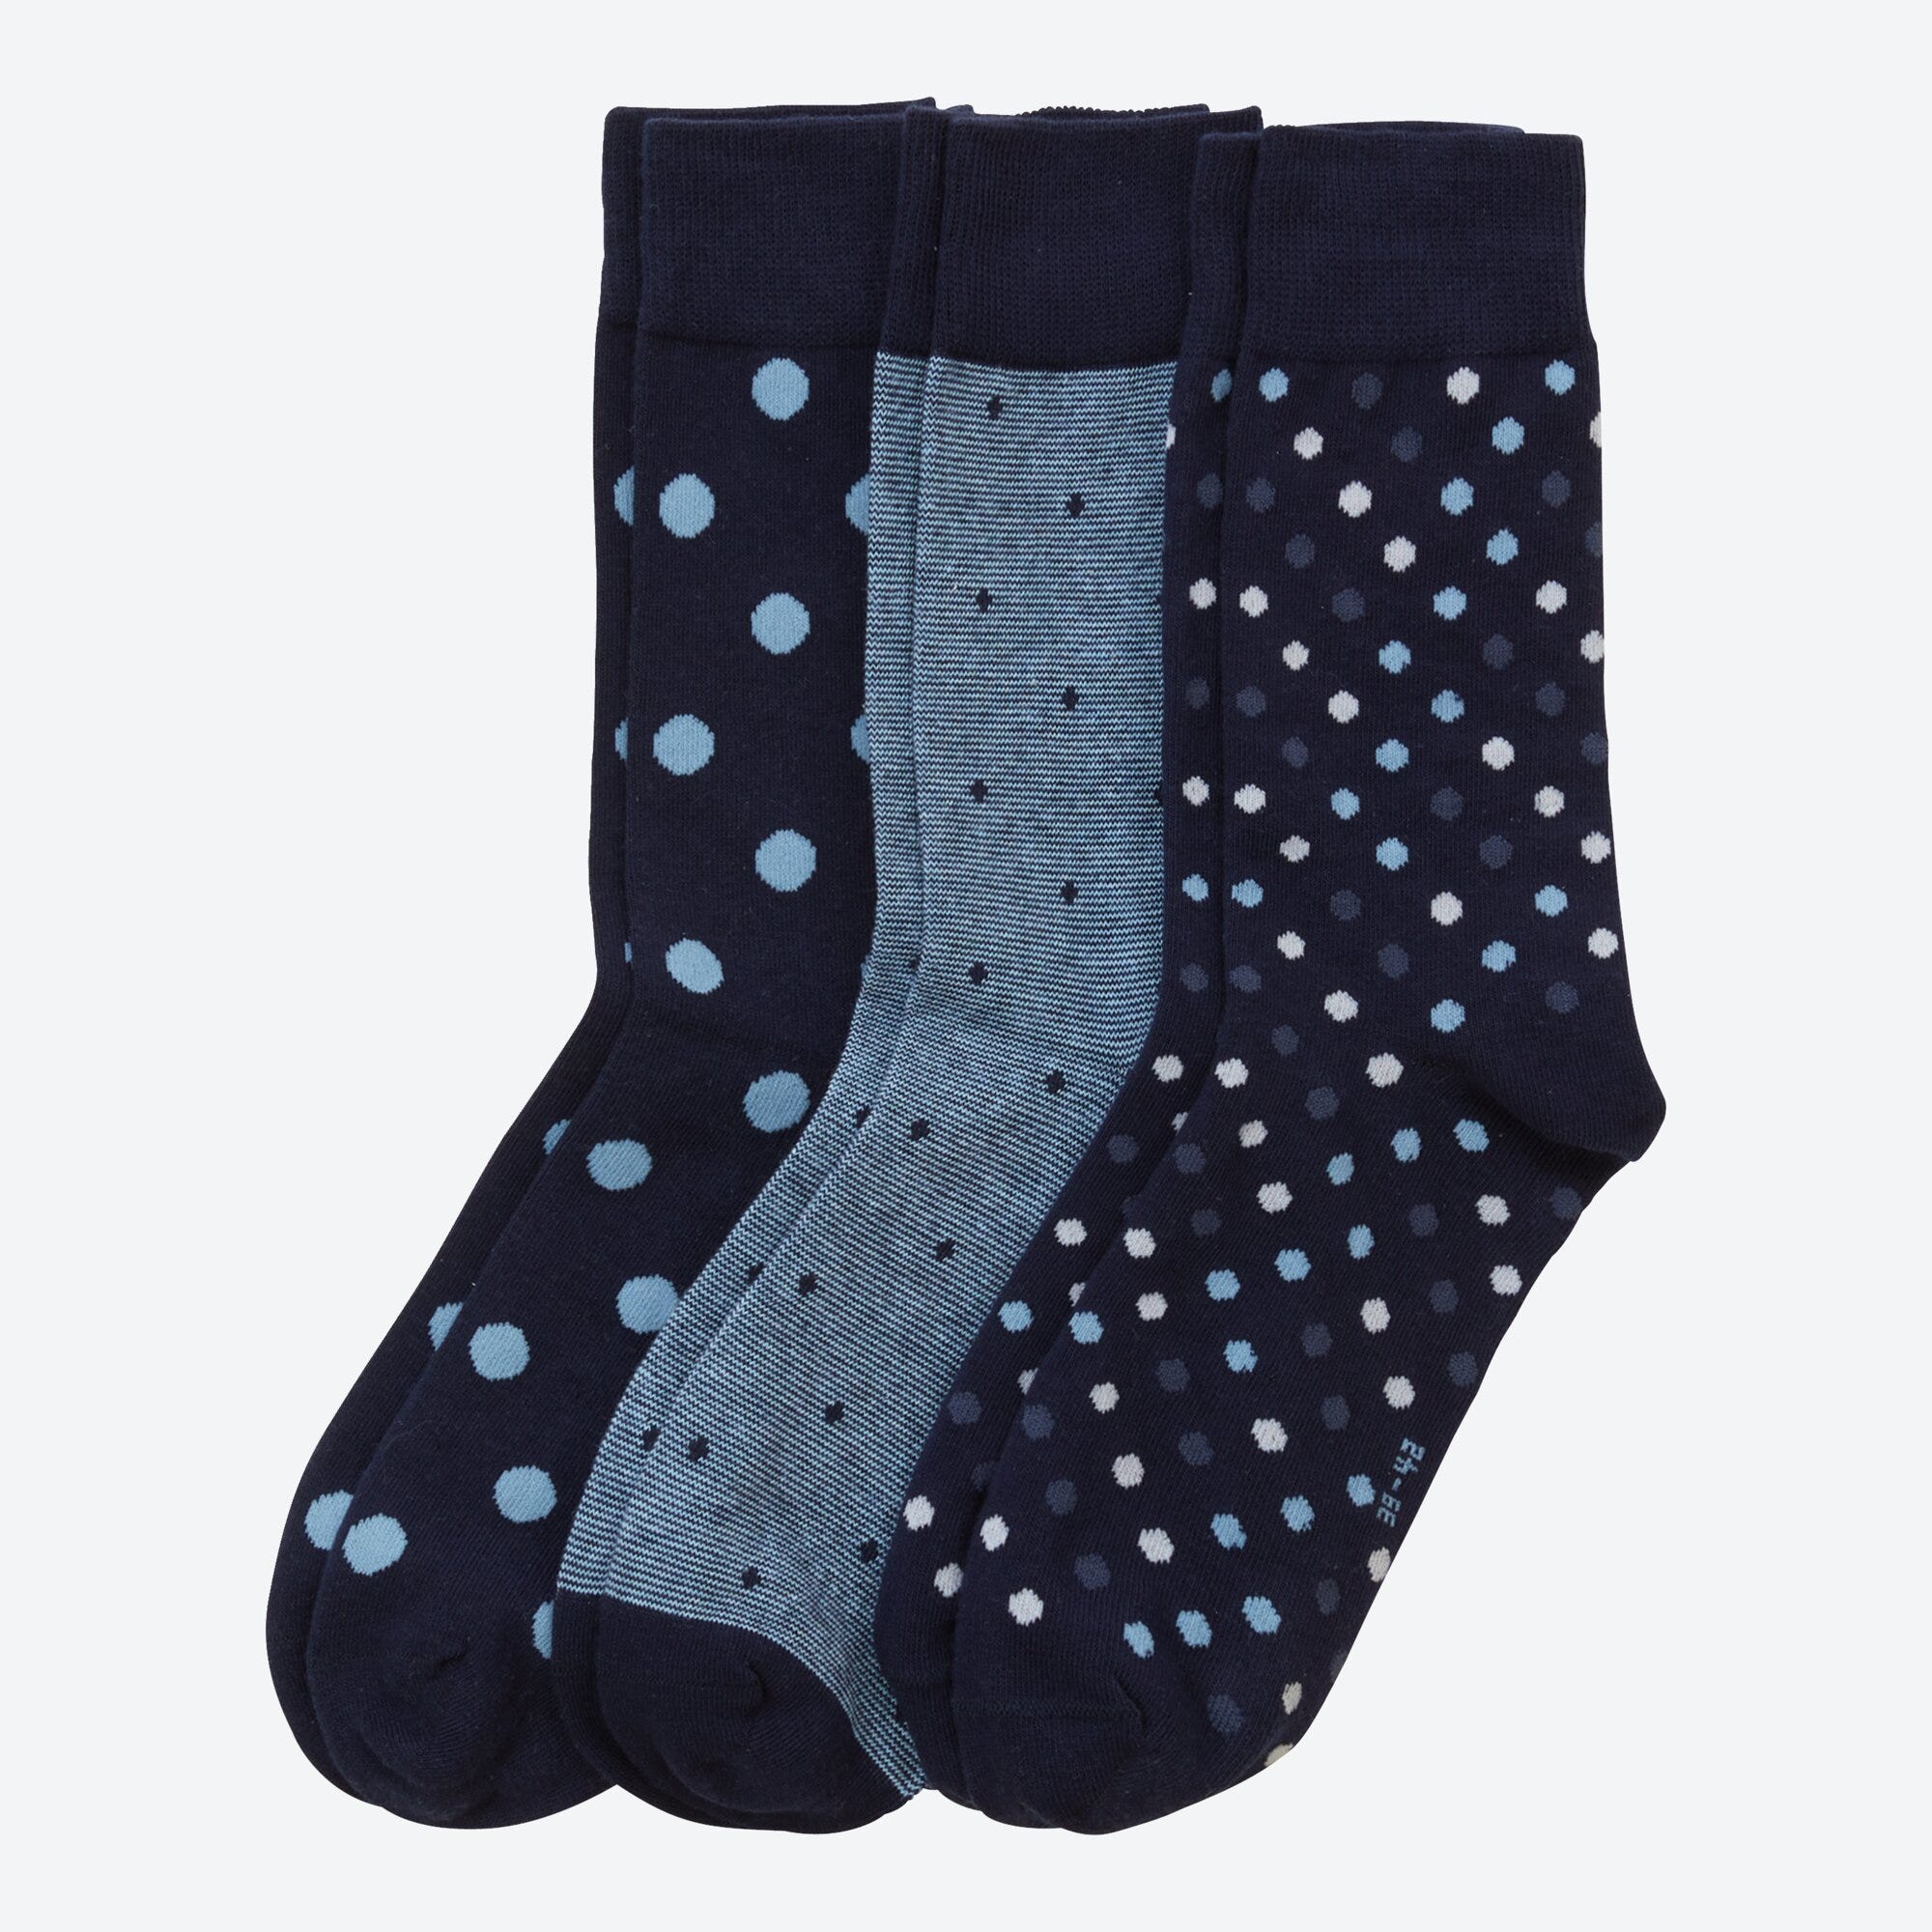 Herren-Socken mit tollem Muster, 3er-Pack